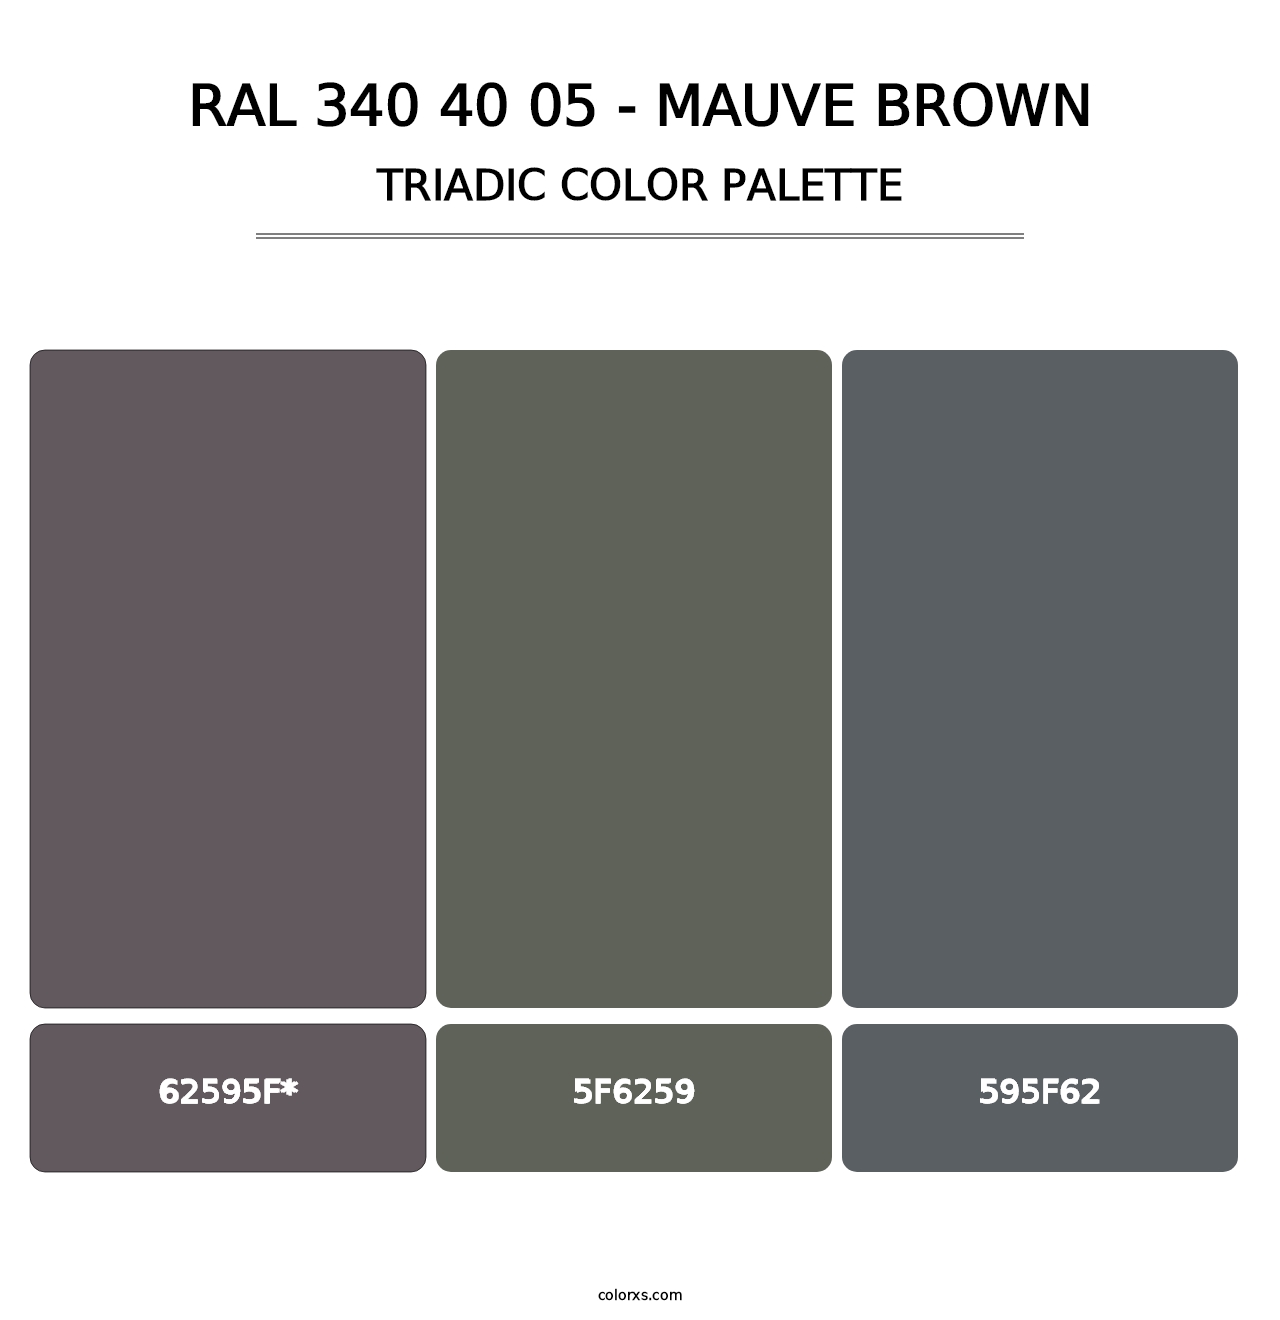 RAL 340 40 05 - Mauve Brown - Triadic Color Palette